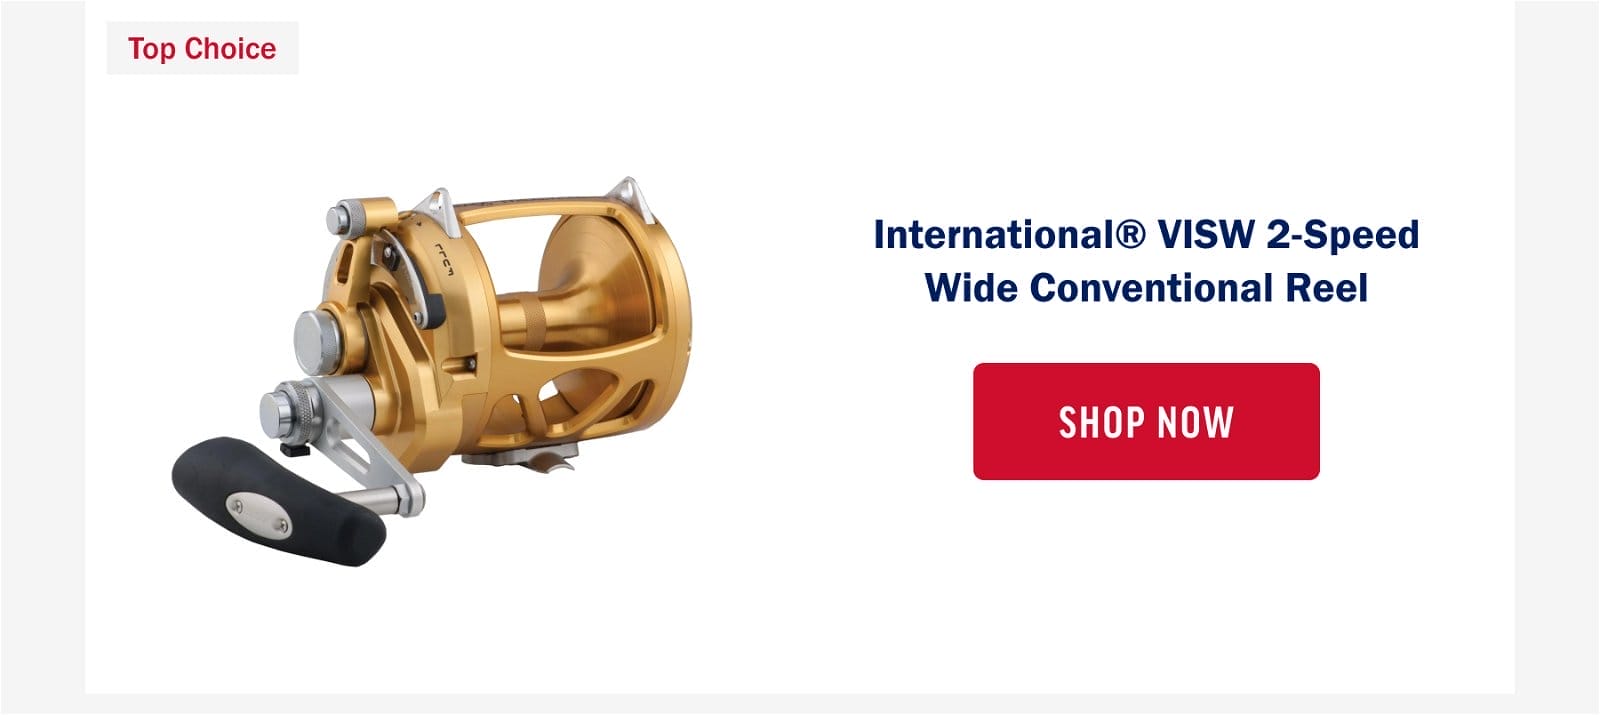 International® VISW 2-Speed Wide Conventional Reel